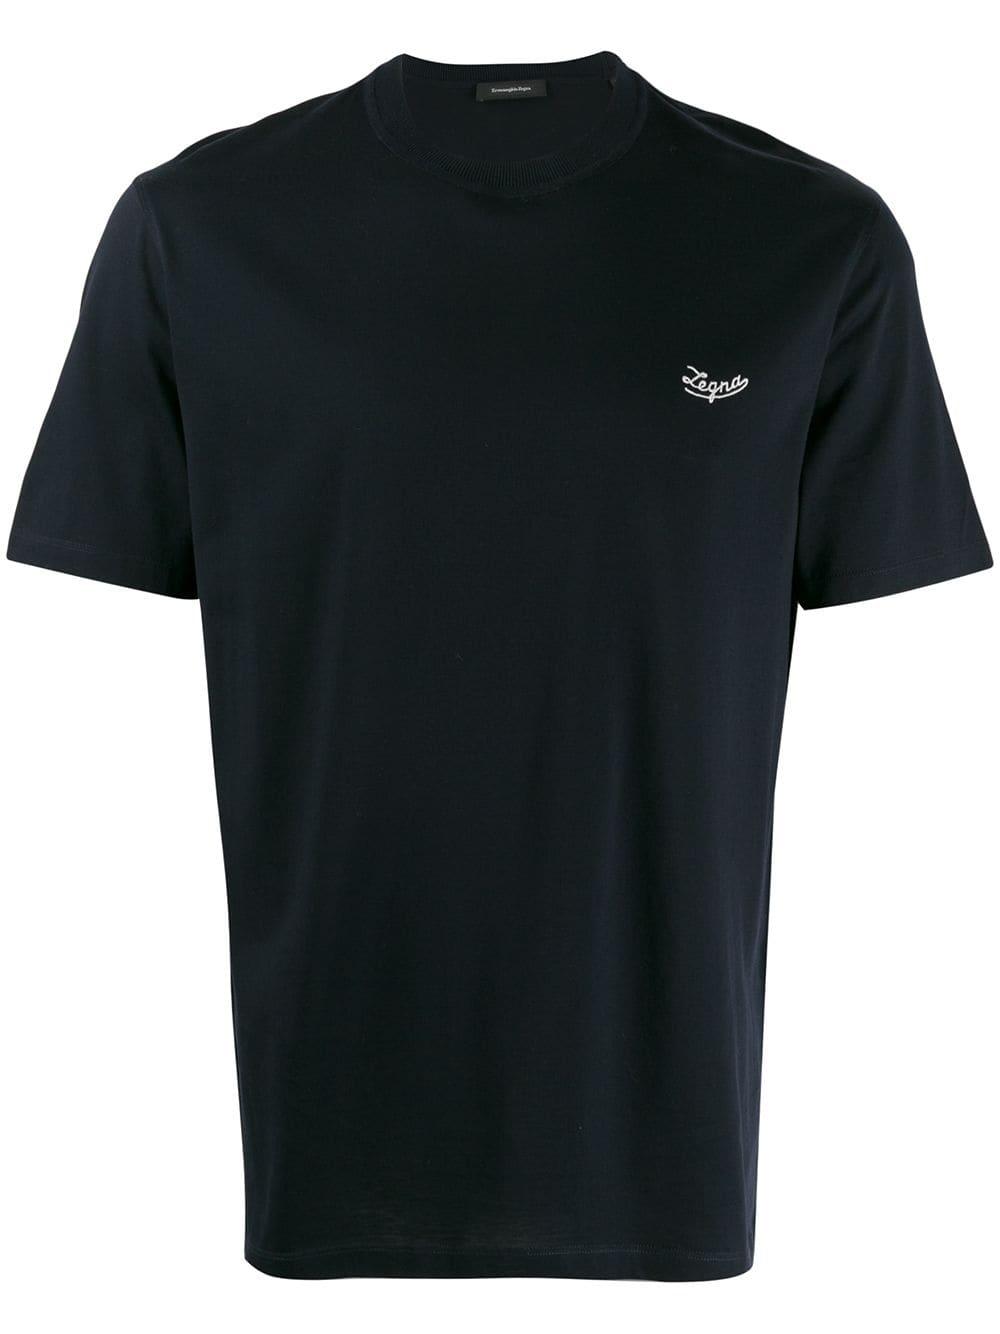 Ermenegildo Zegna Cotton Logo Print T-shirt in Blue for Men - Save 5% ...